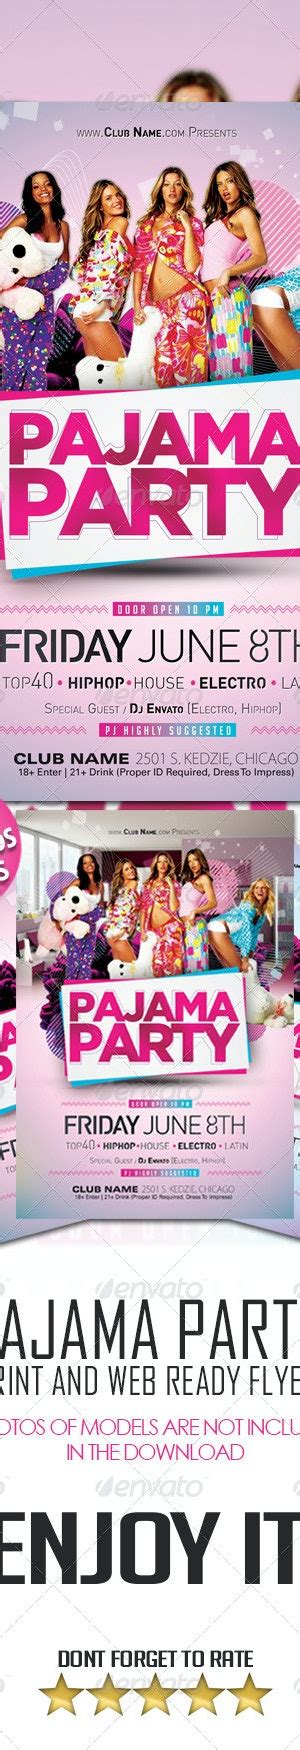 pajama party flyer print templates graphicriver